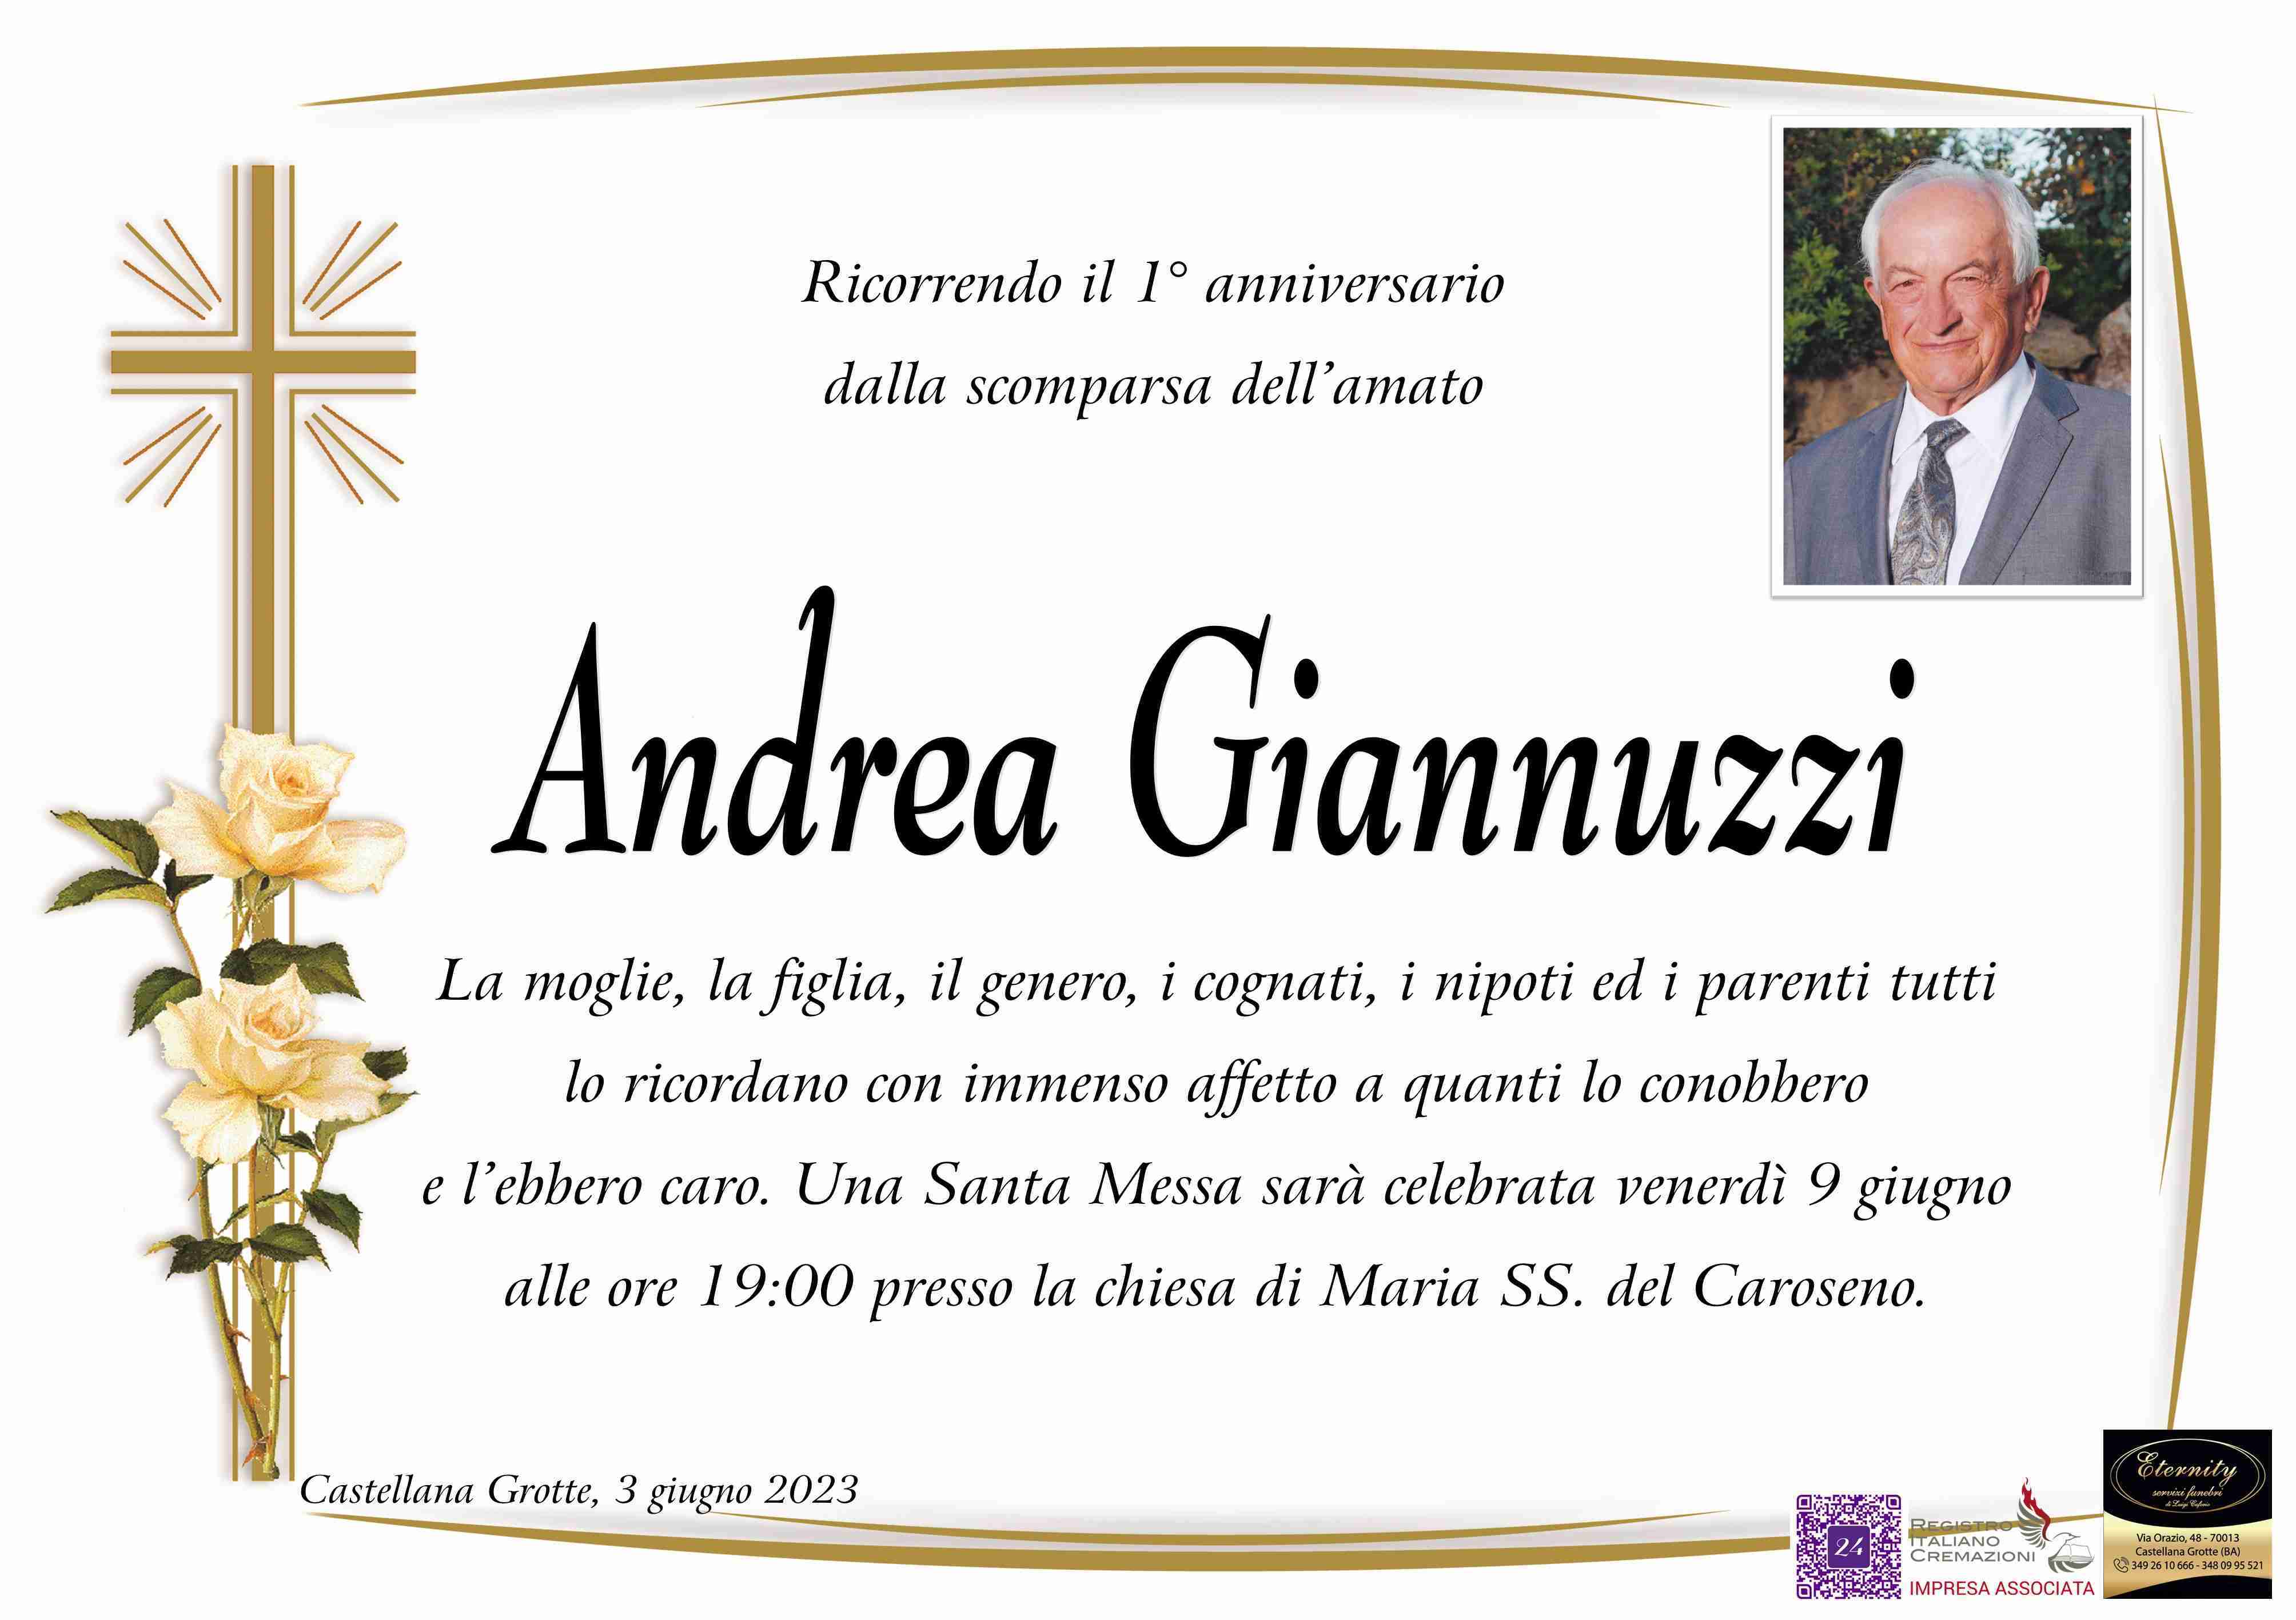 Andrea Giannuzzi